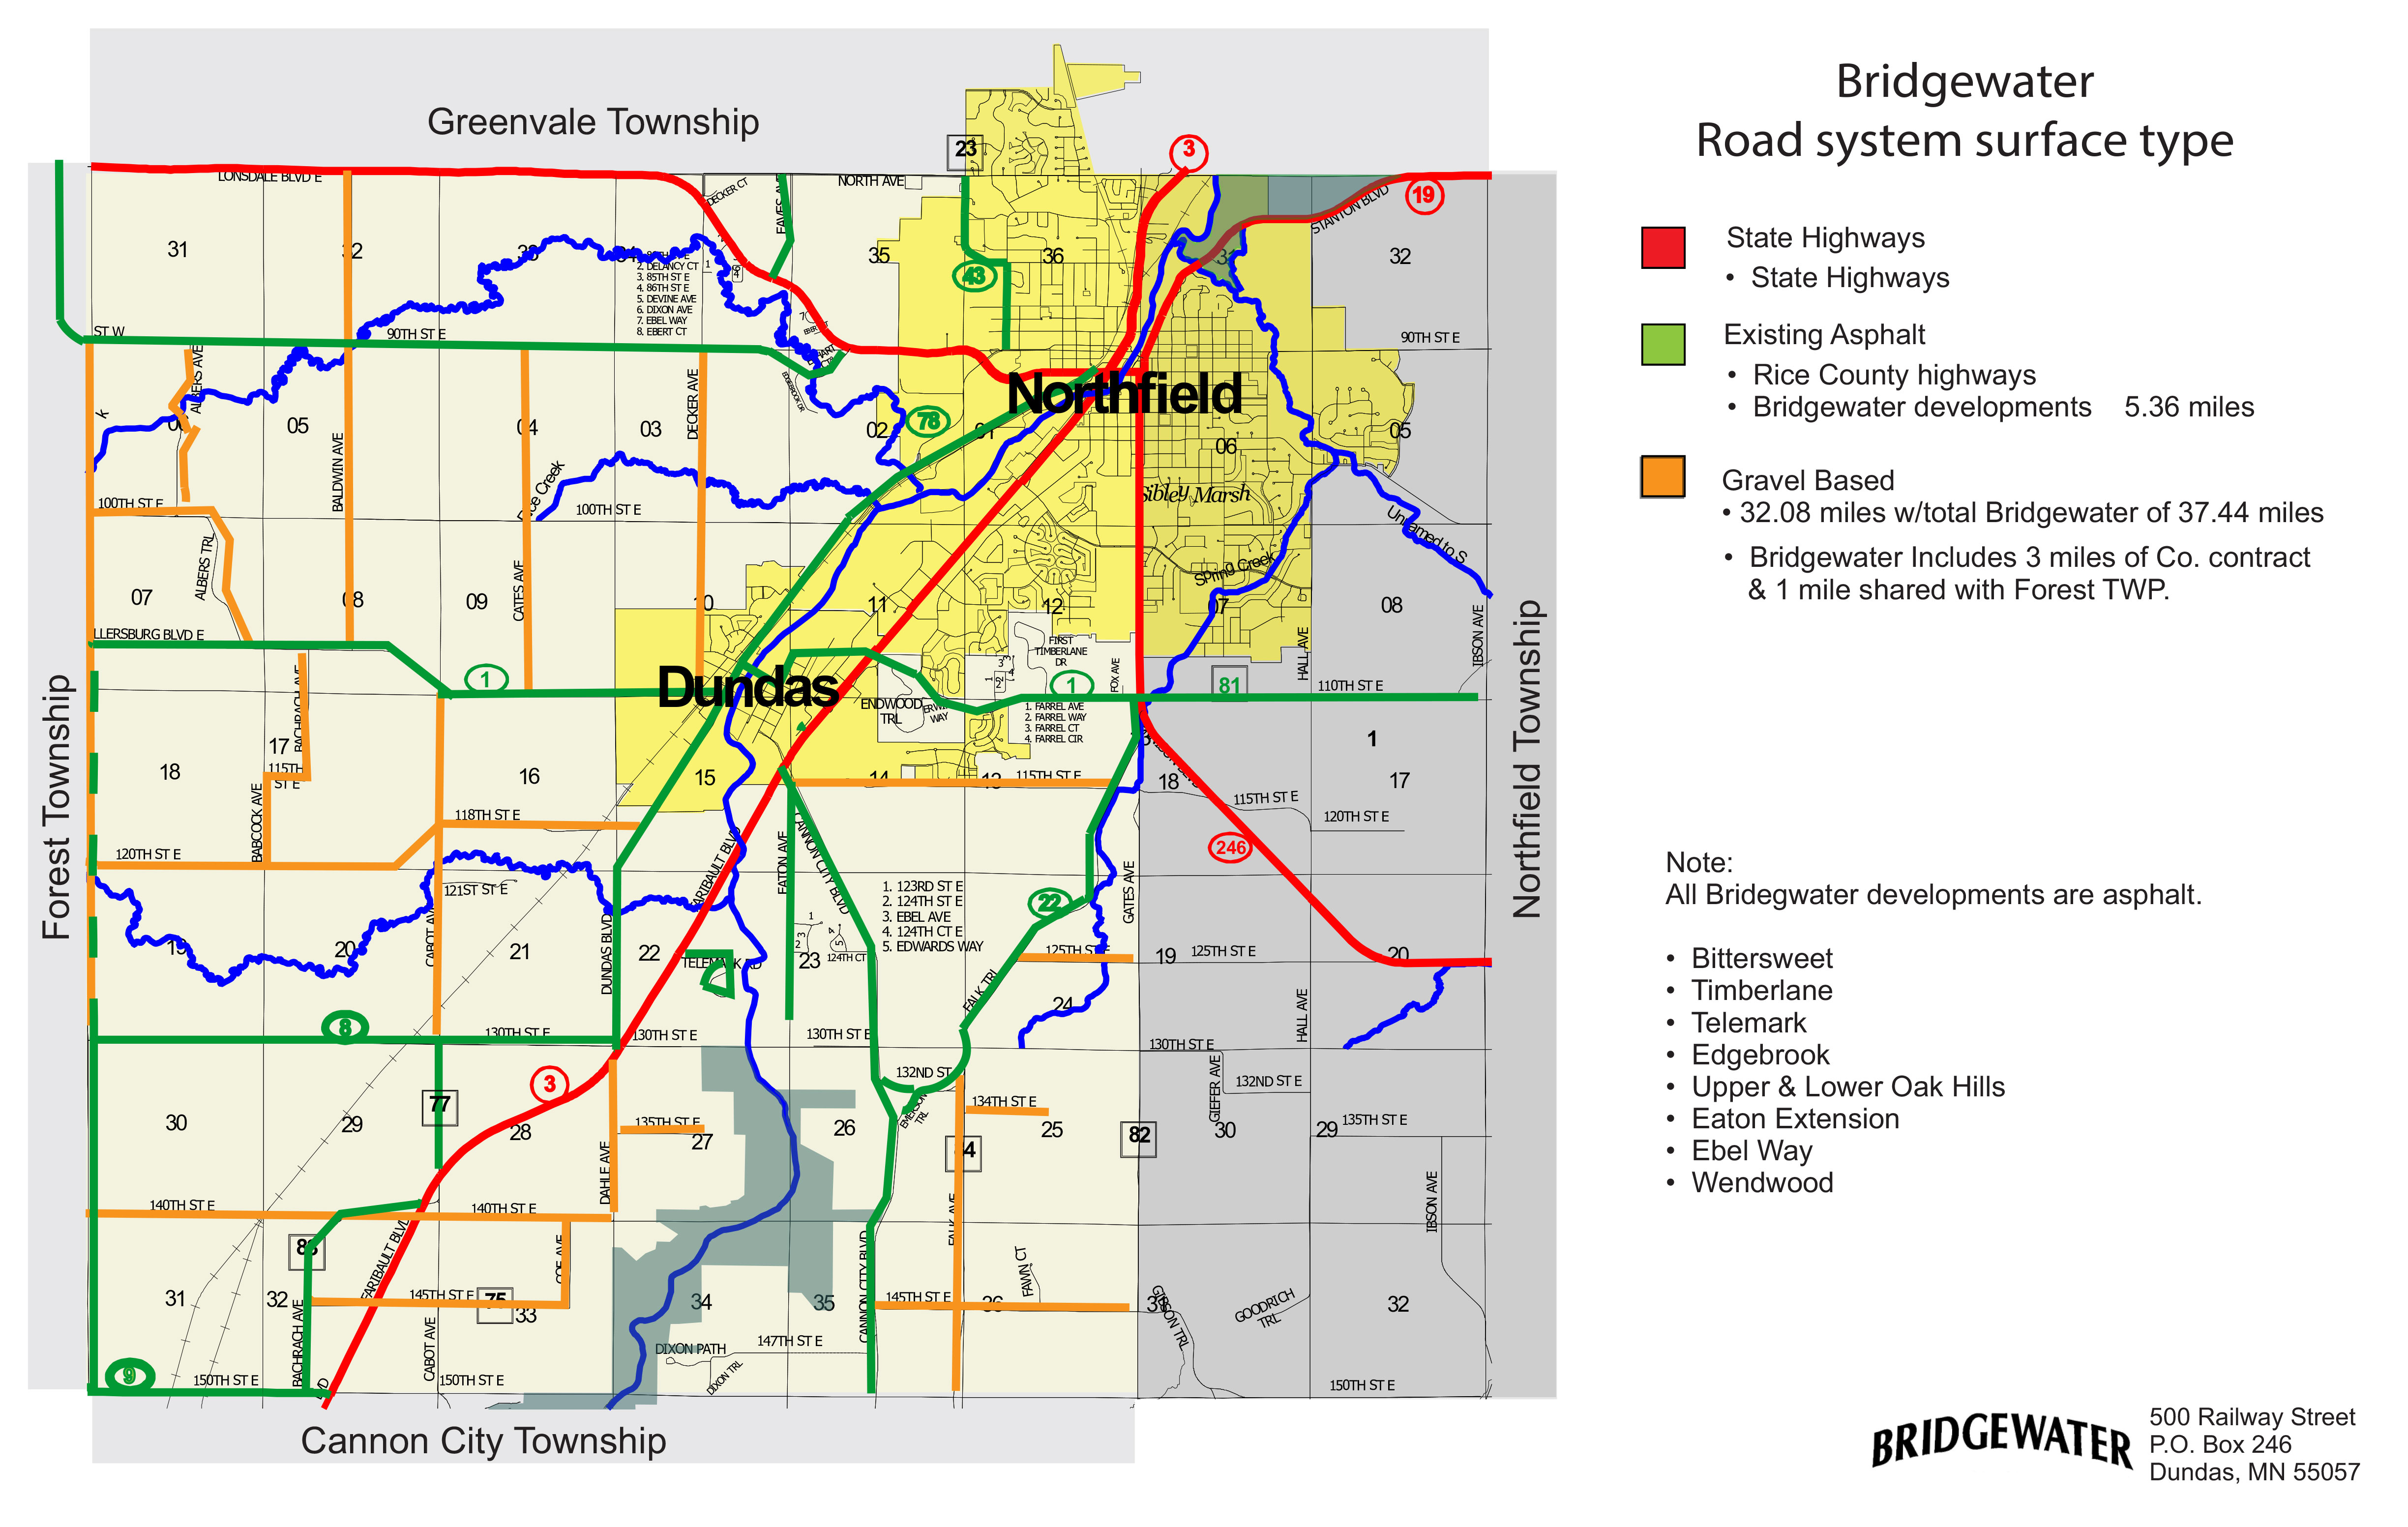 2019 Bridgewater Road System Surface Type